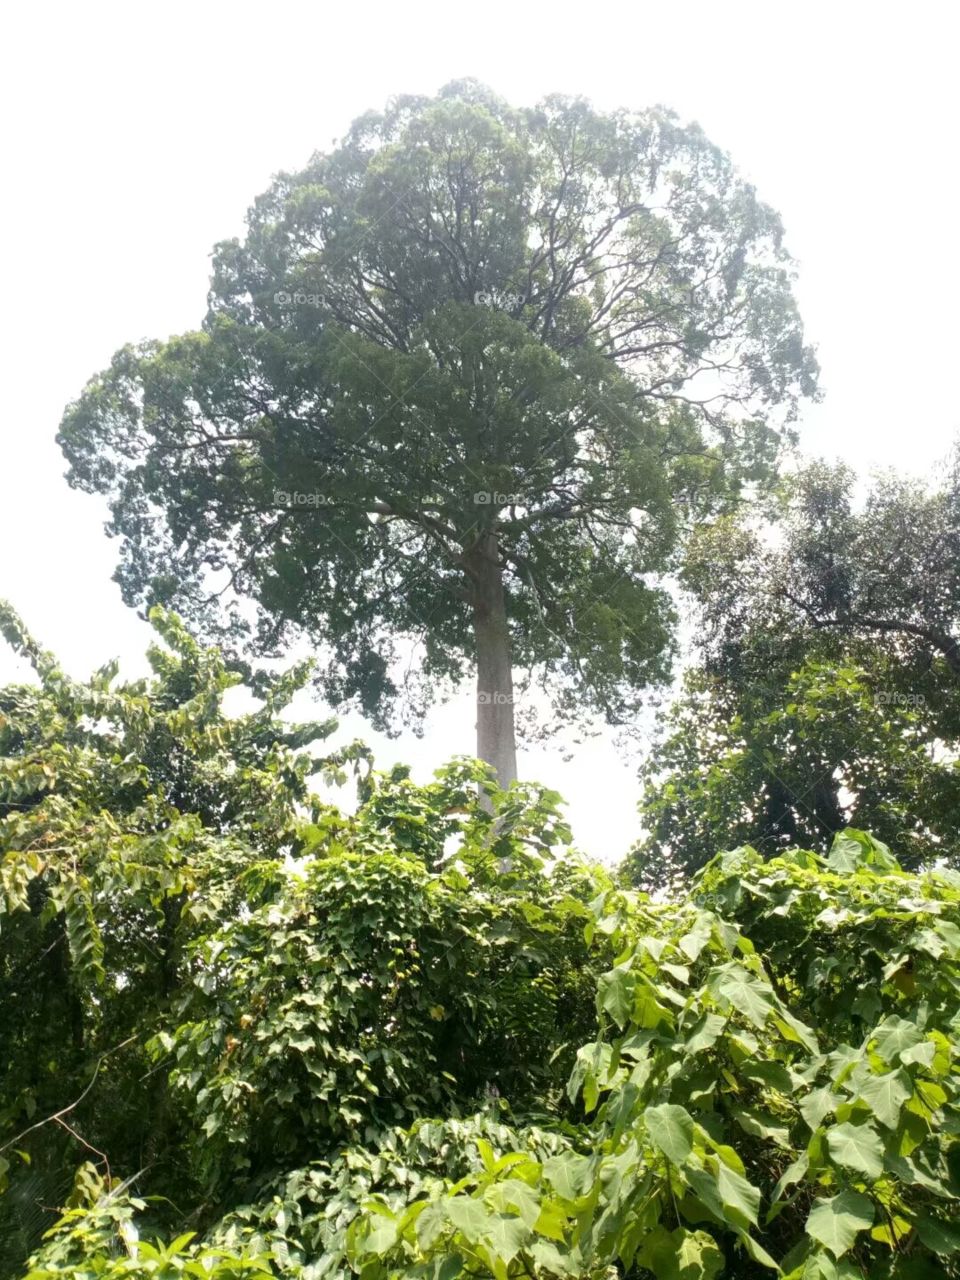 Malaysian Forest/Hutan Malaysia/الغابات الماليزية/马来西亚山林【Pohon durianشجرة دوريانDurian tree榴莲树】